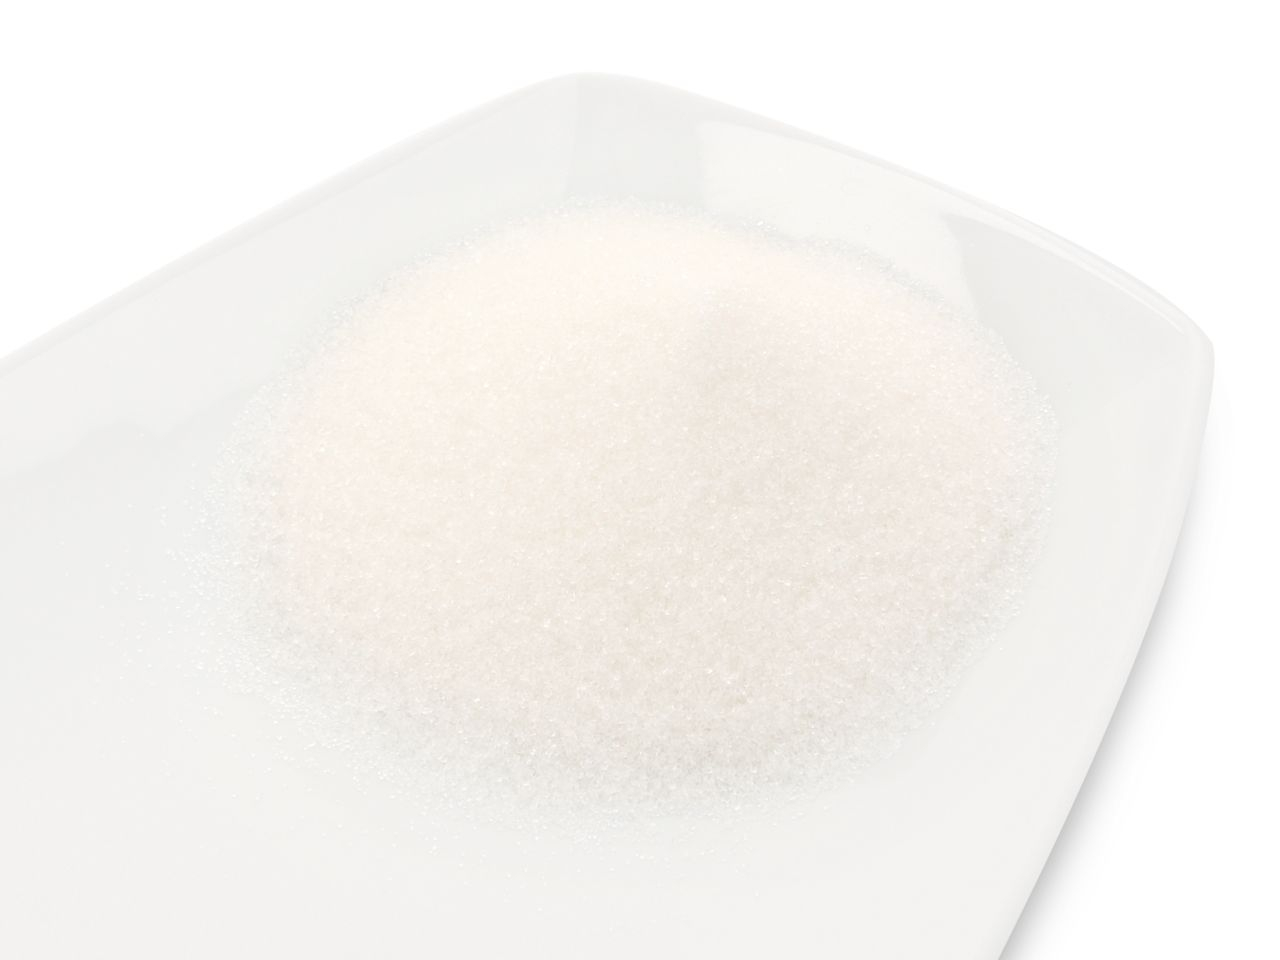 Isomaltulose (Palatinose TM) 2,0kg